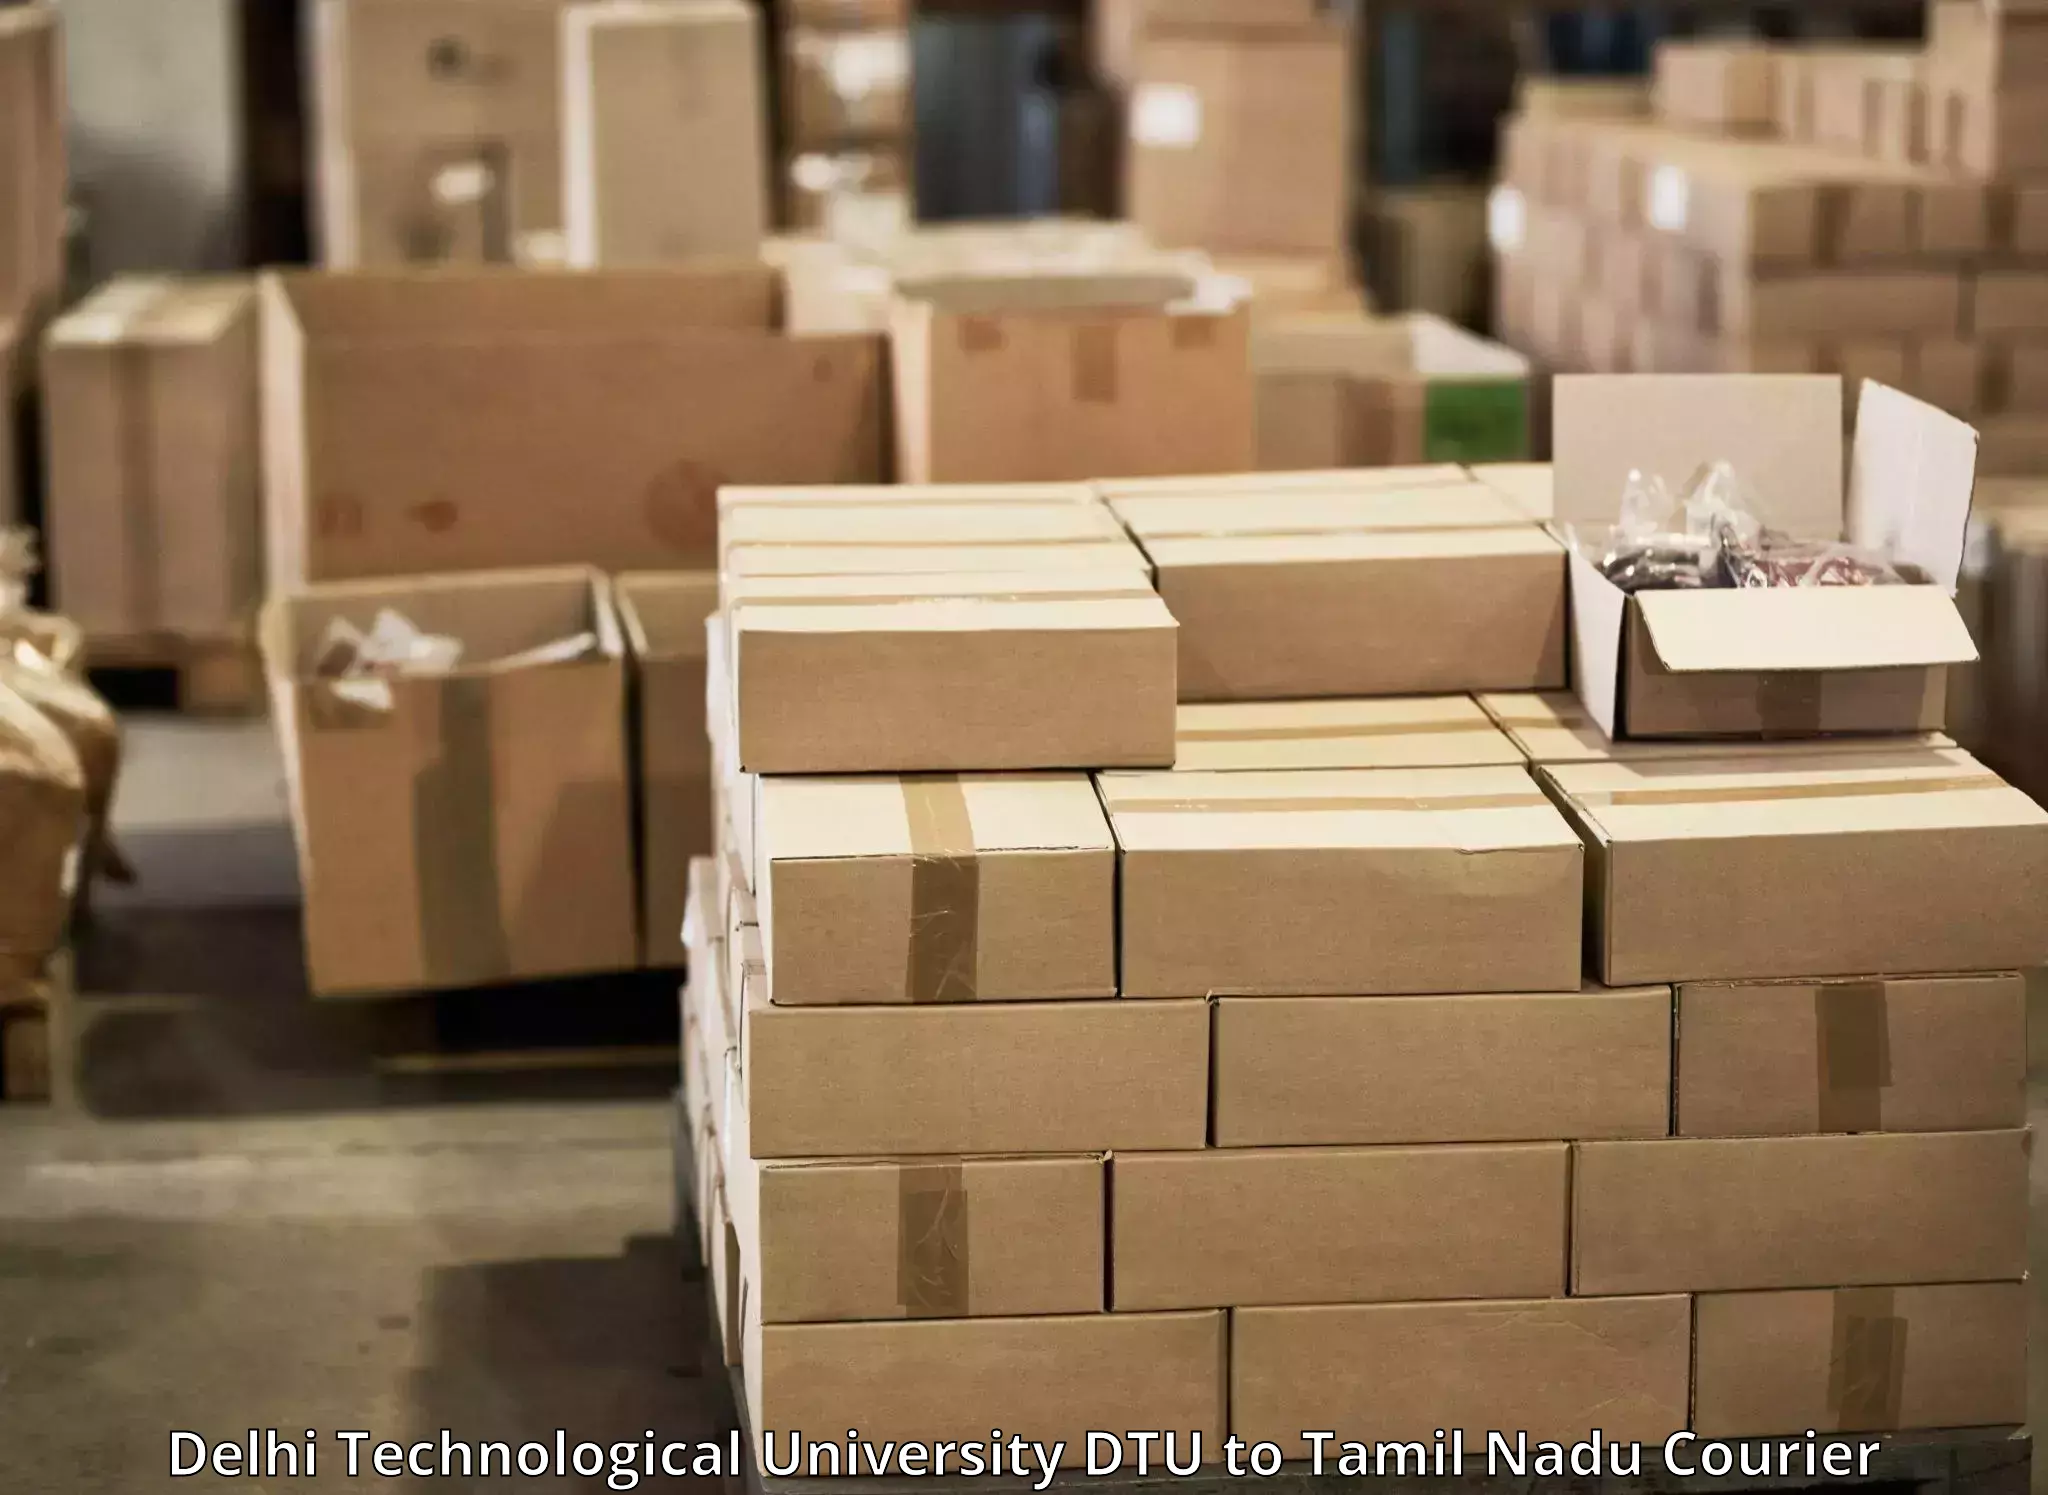 Express logistics Delhi Technological University DTU to Palani